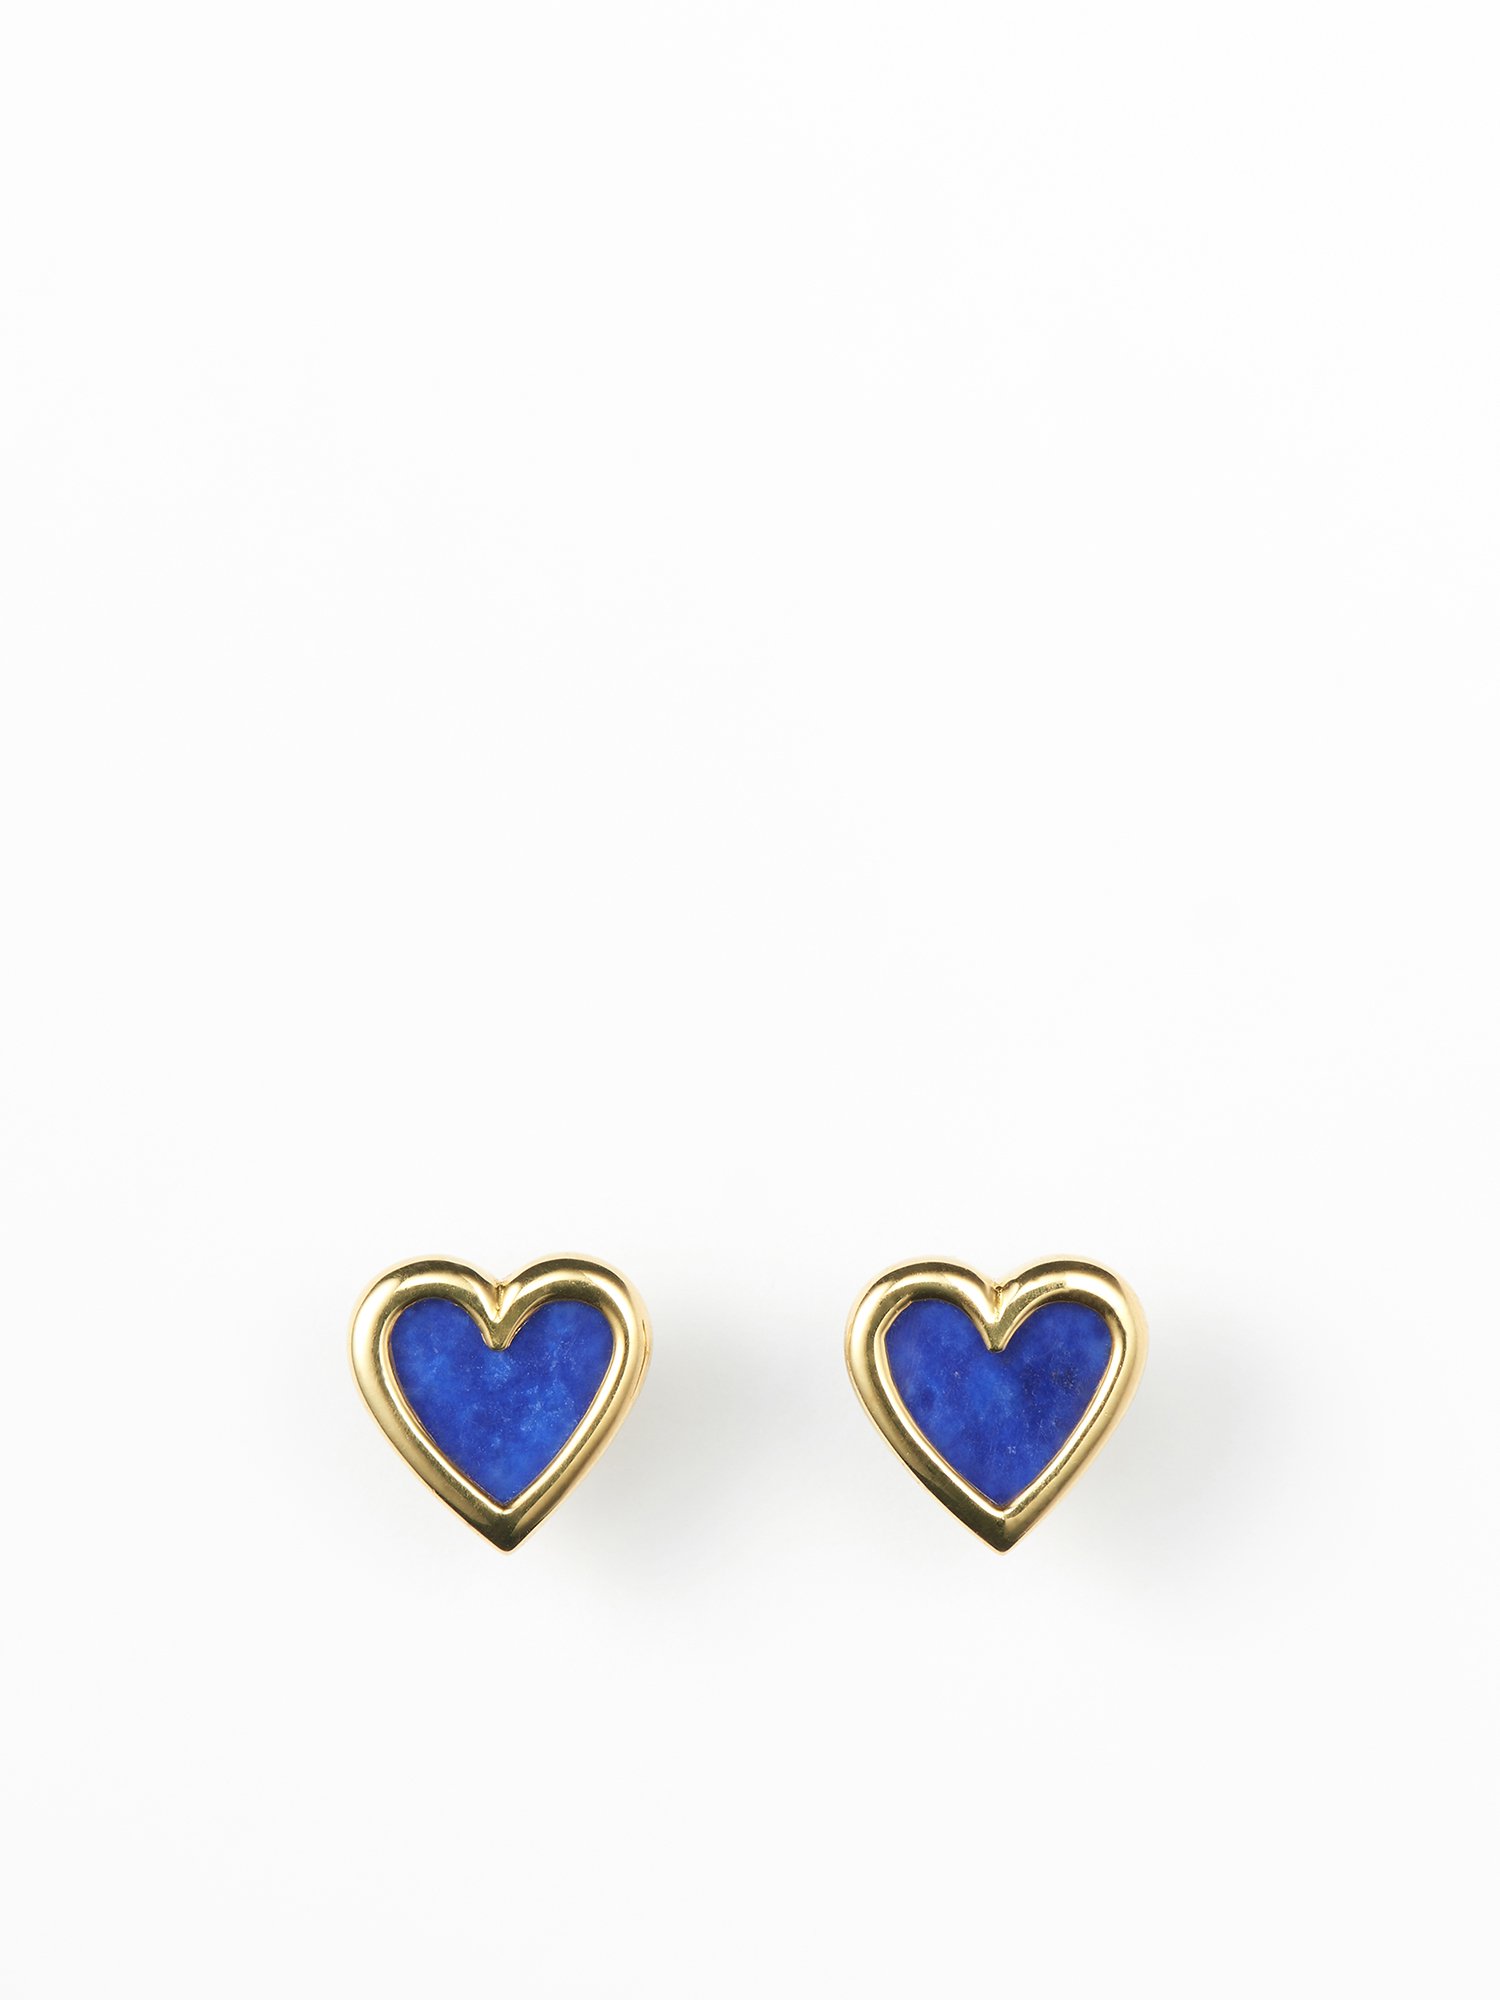  SOPHISTICATED VINTAGE / Vis stone earrings (heart) / Lapis